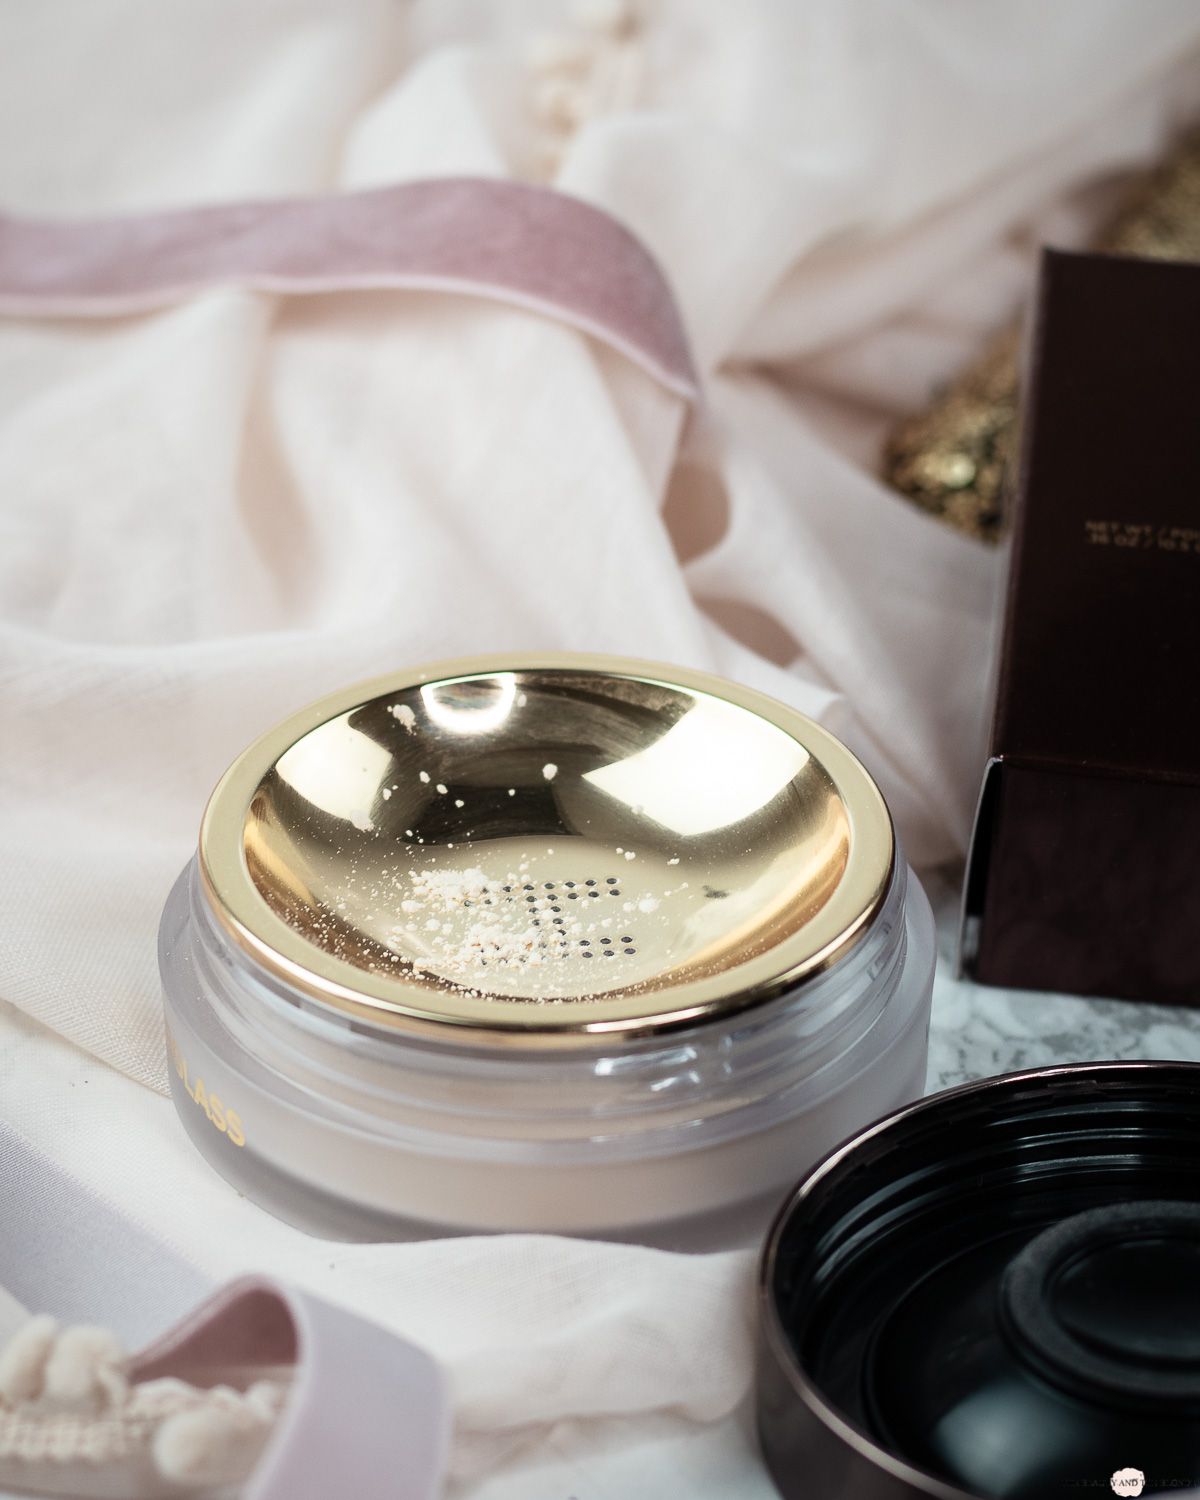 Hourglass Veil Translucent Setting Powder Puder Review Highend Makeup